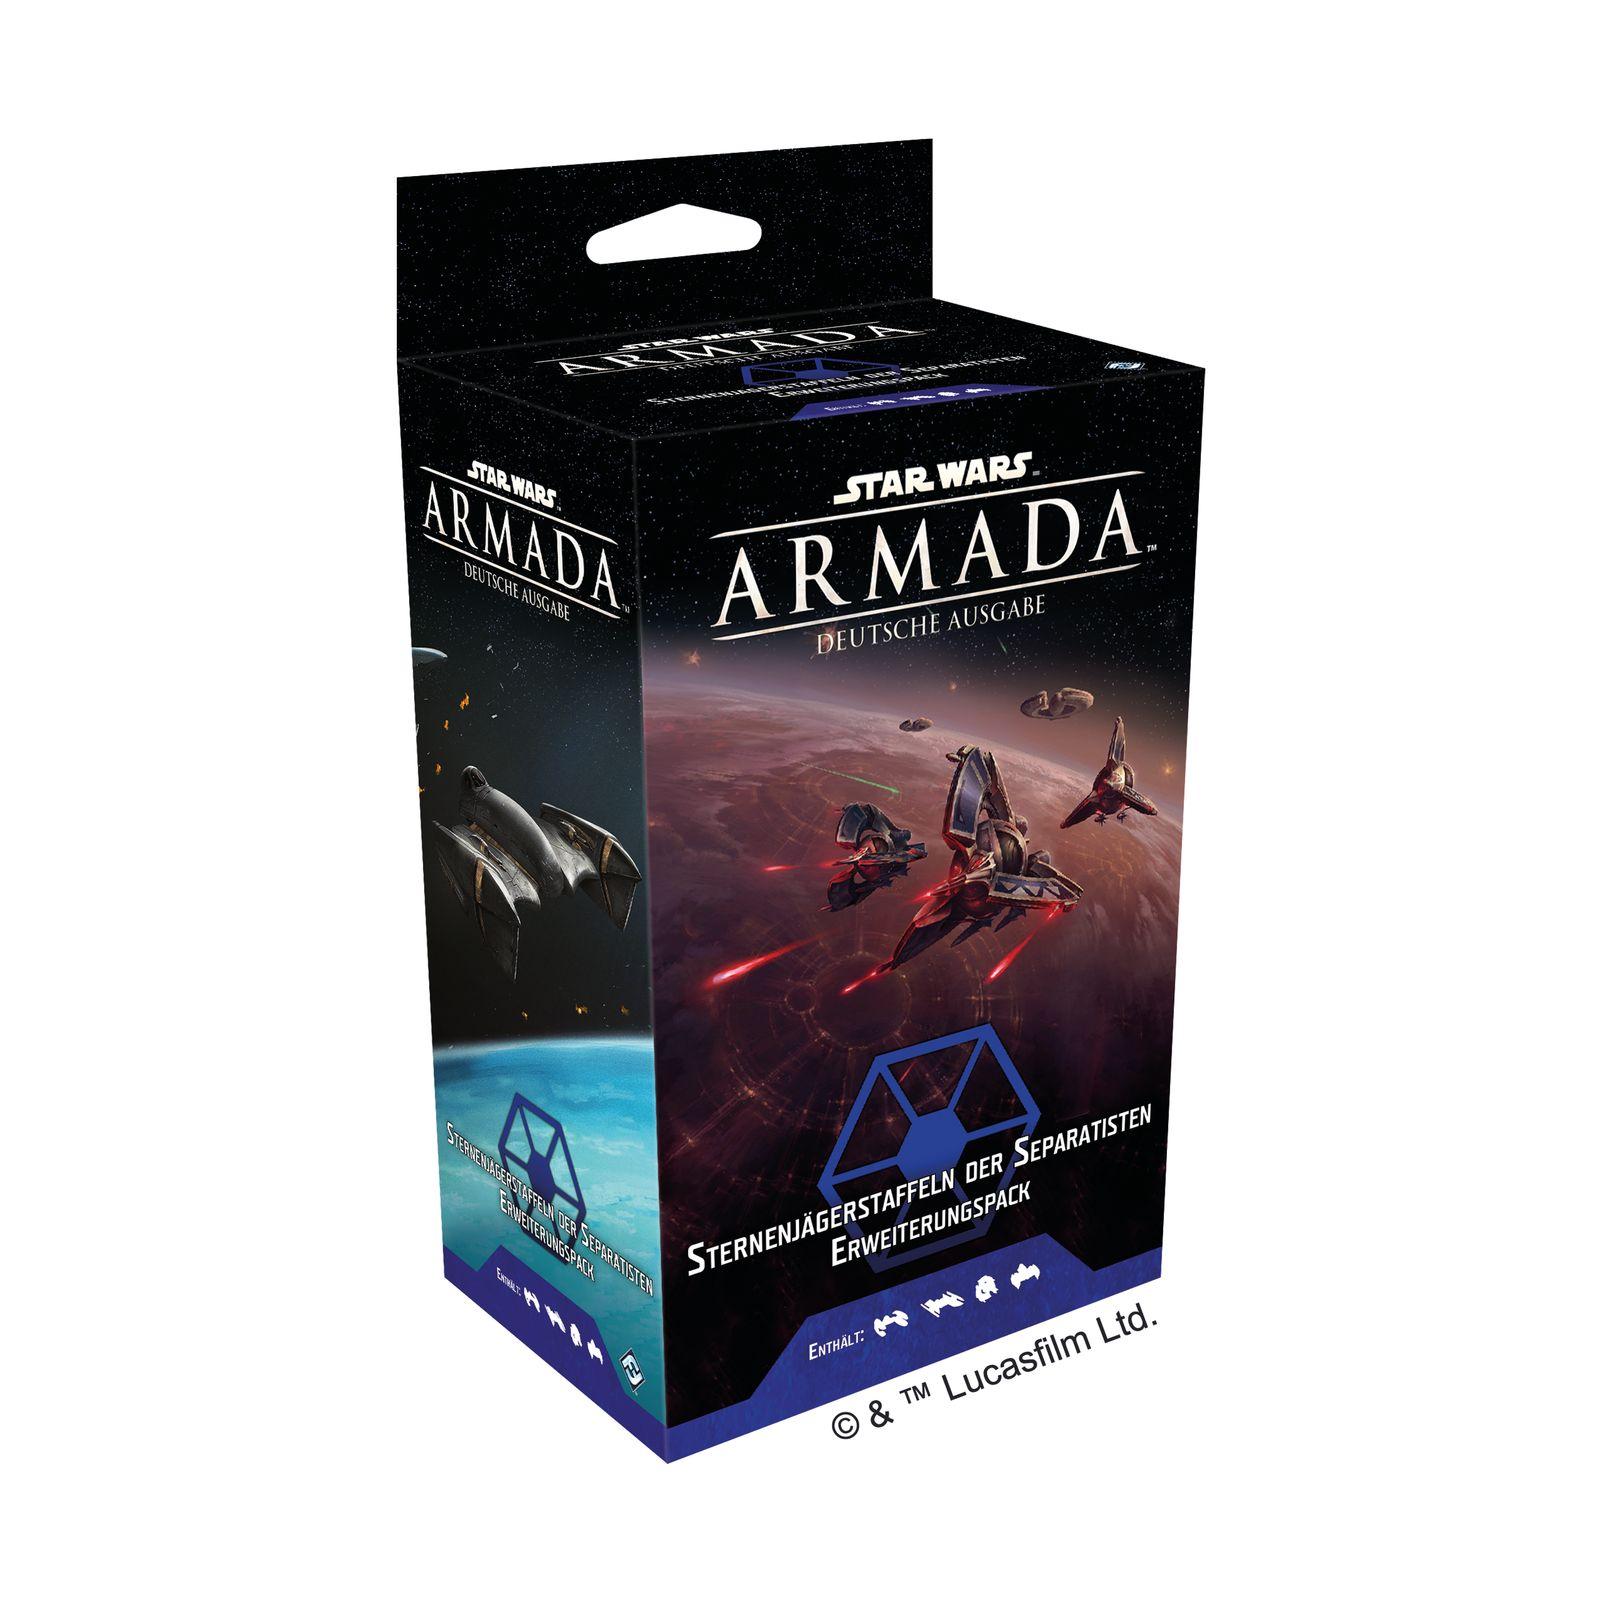 Star Wars: Armada - Sternenjägerstaffeln der Seperatisten